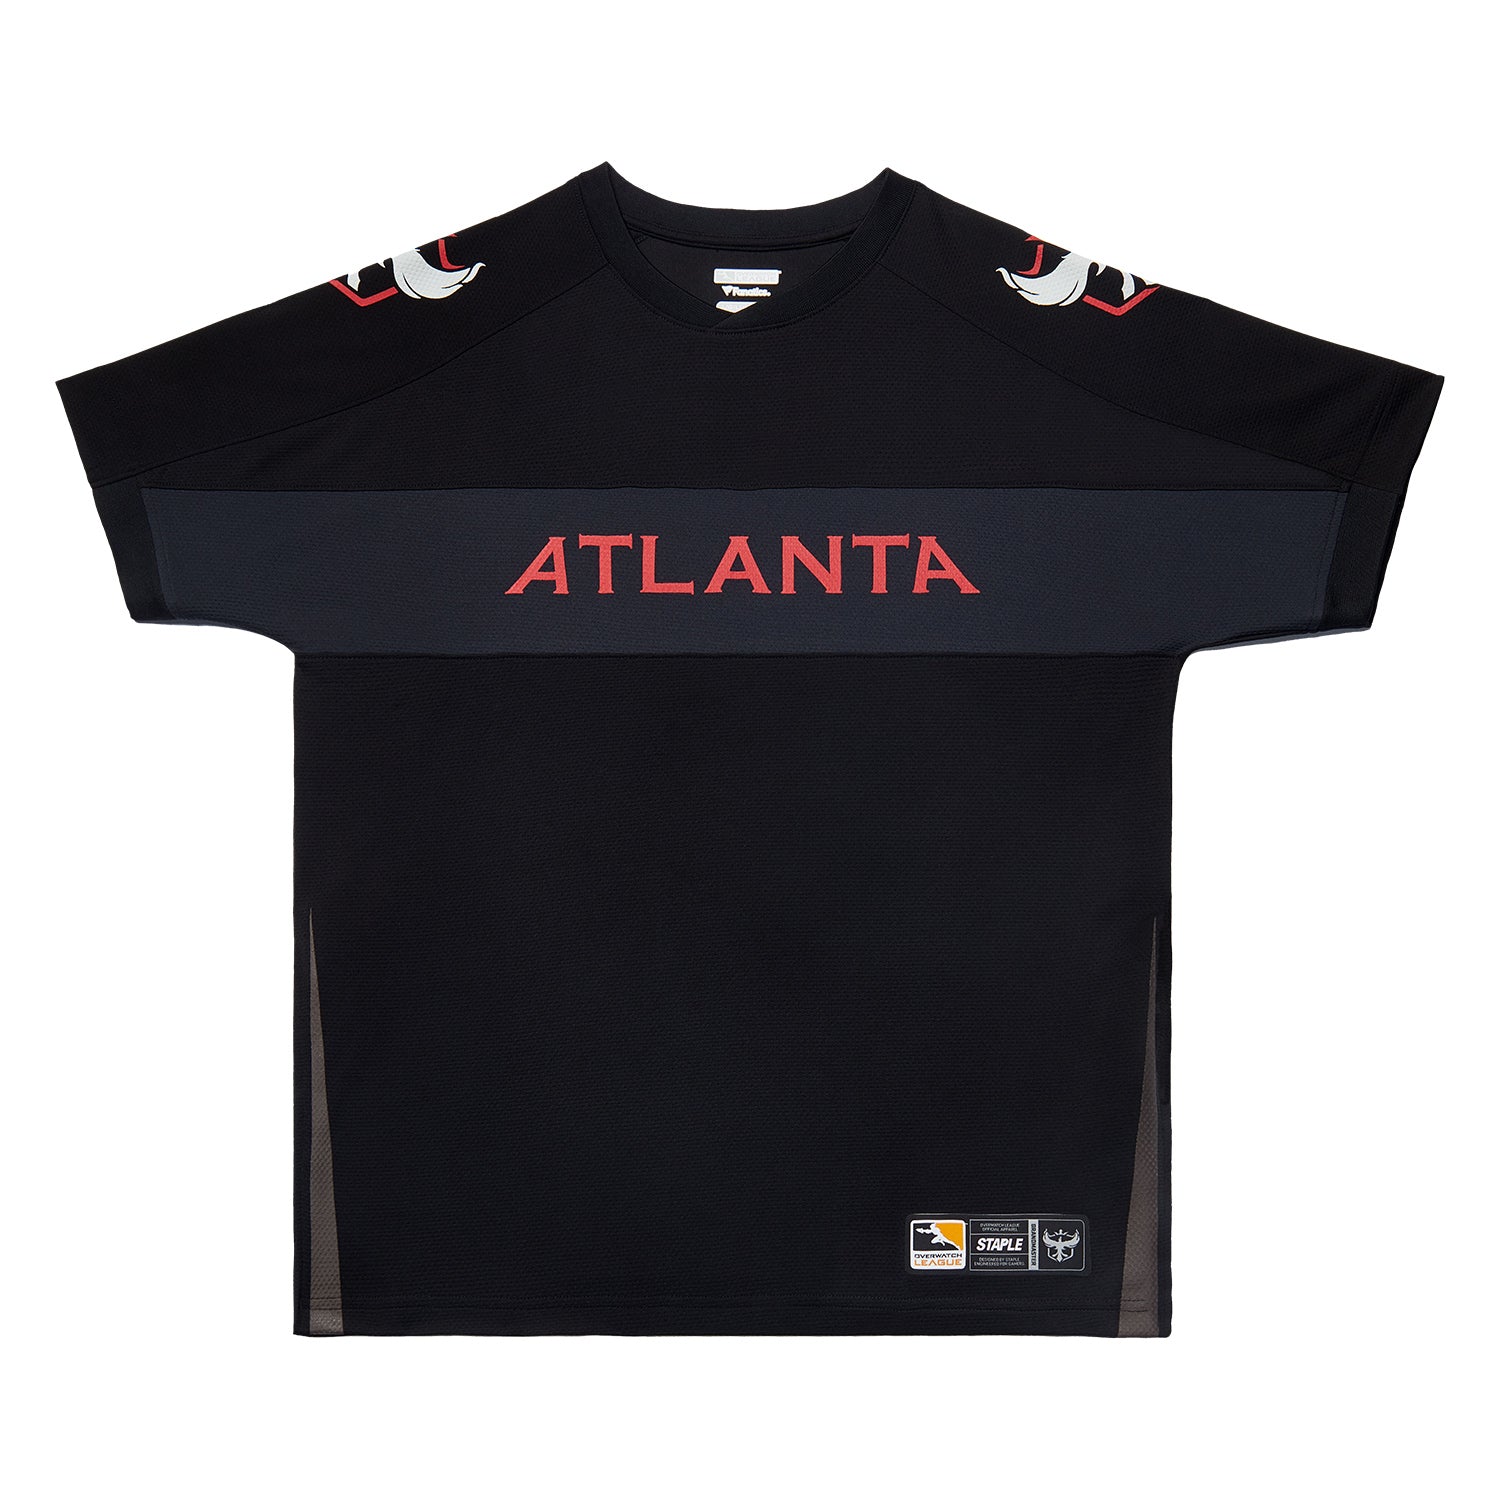 Atlanta Reign Black Jersey - Front View